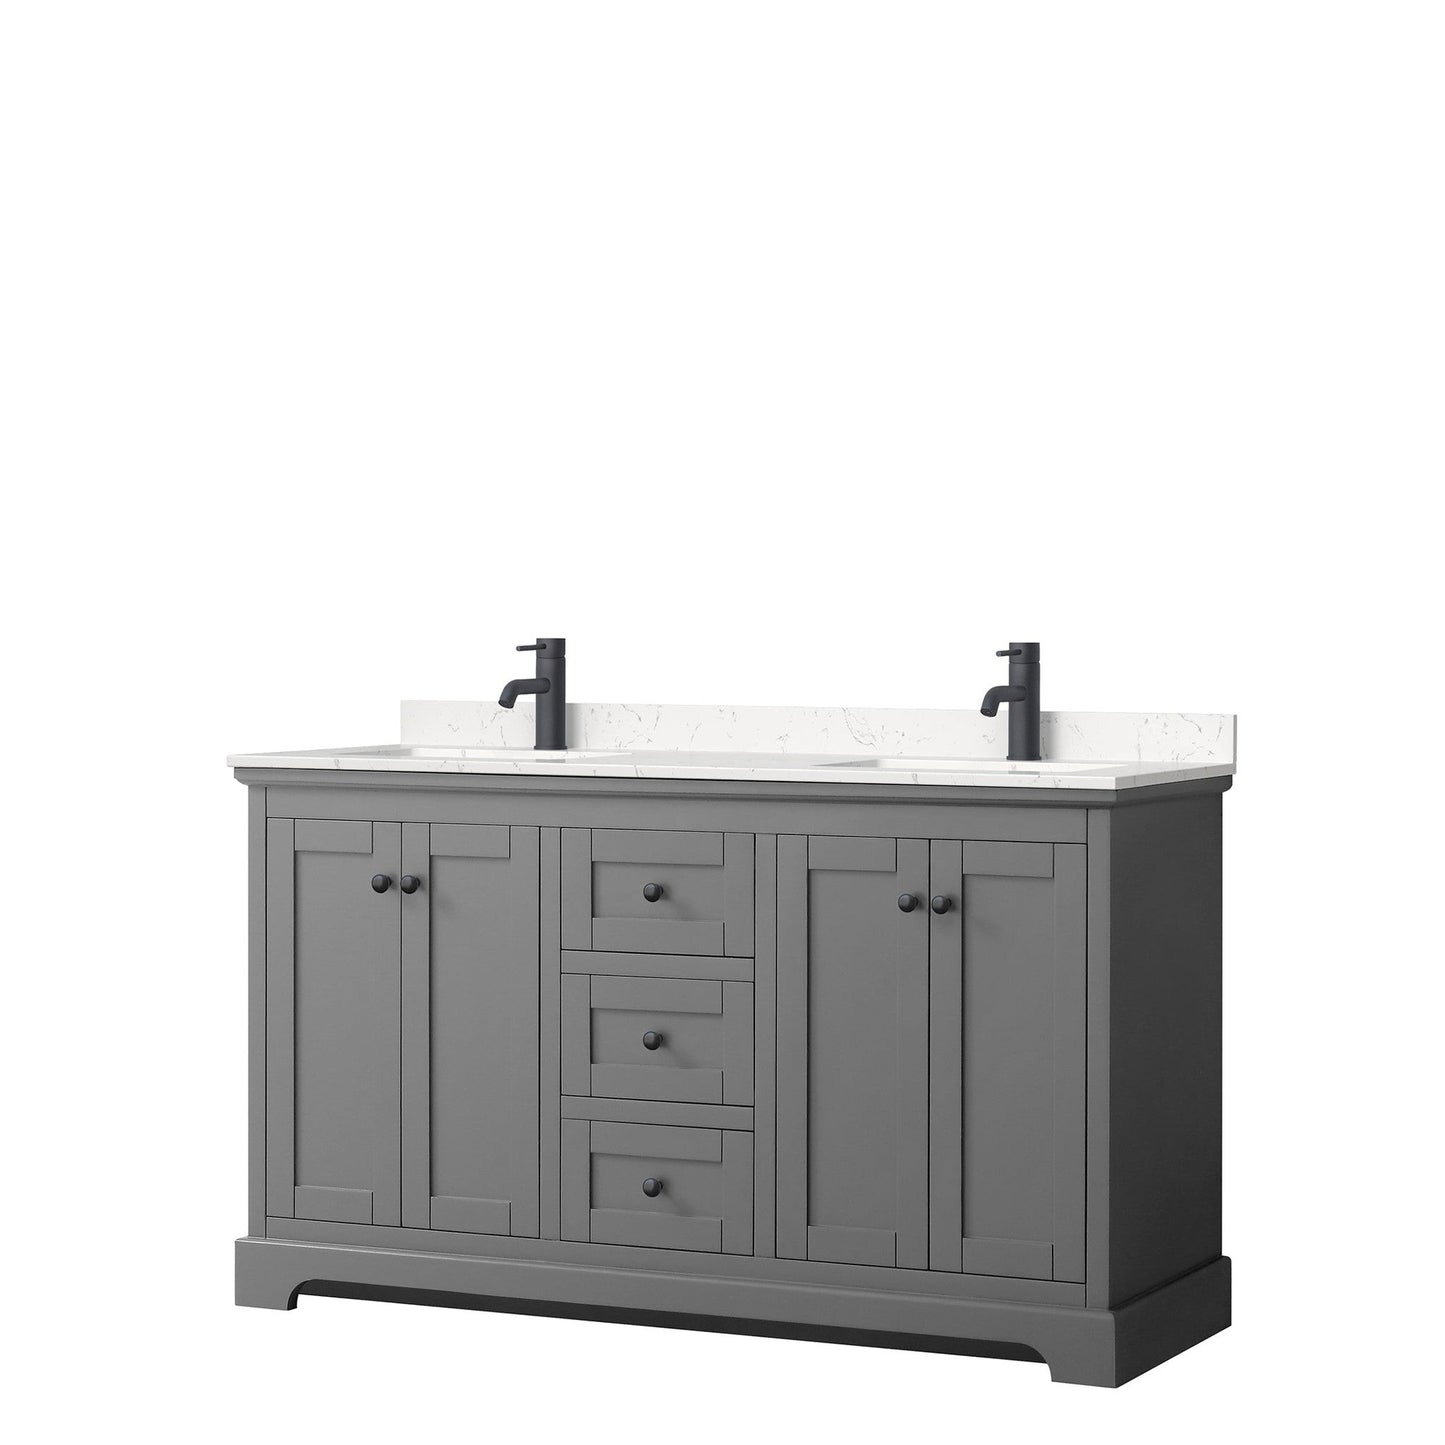 Avery 60" Double Bathroom Vanity in Dark Gray, Carrara Cultured Marble Countertop, Undermount Square Sinks, Matte Black Trim